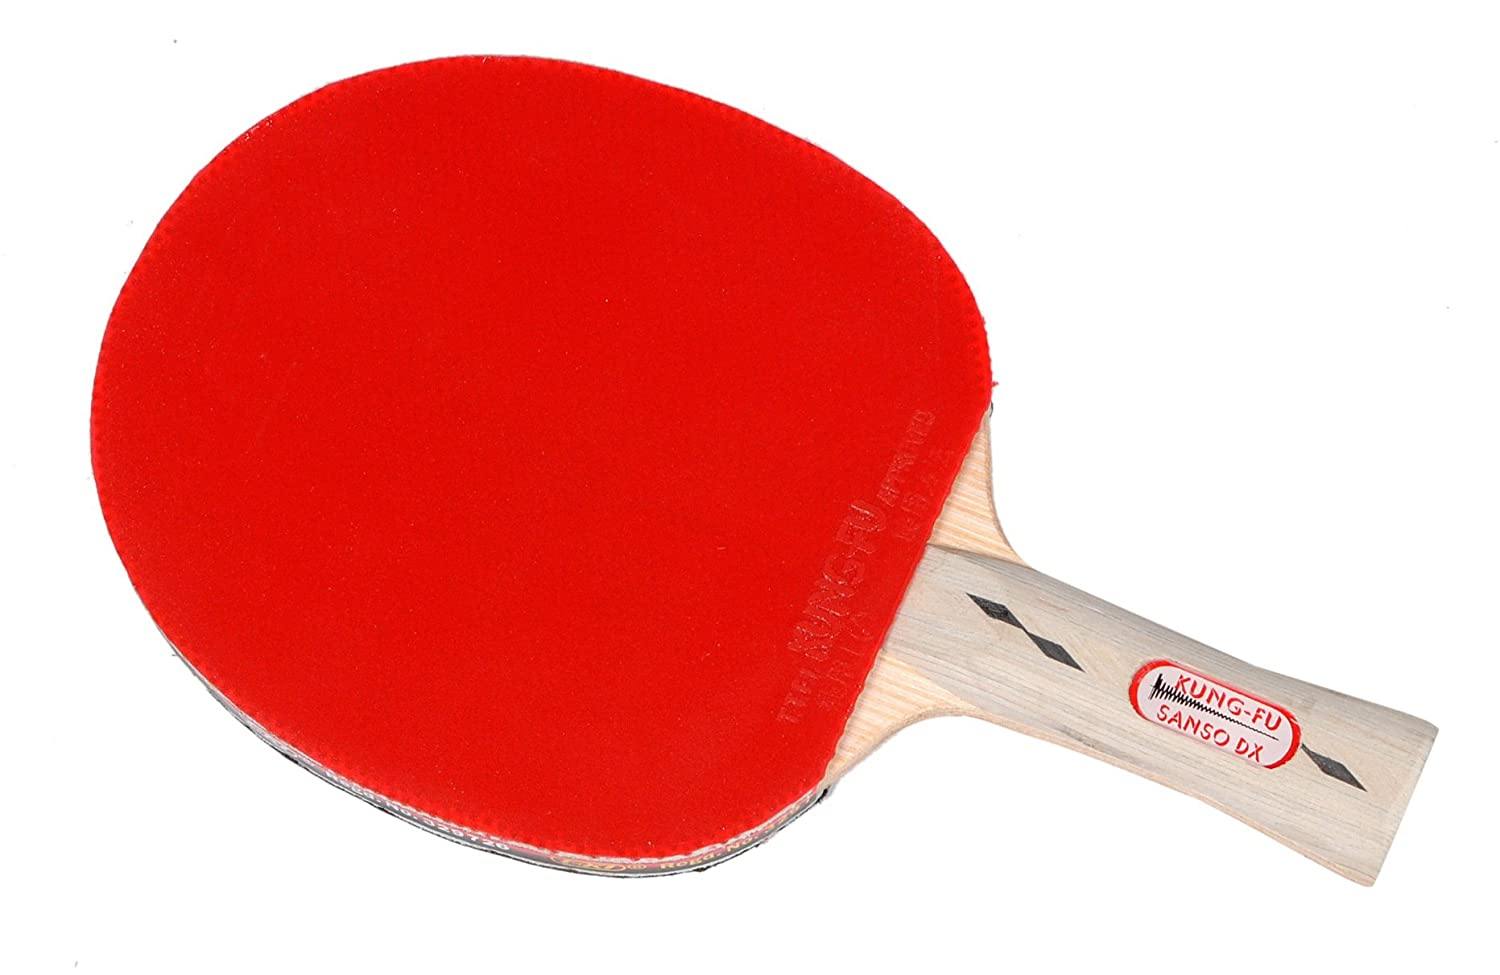 GKI Kung-Fu Sanso DX Table Tennis Bat - Best Price online Prokicksports.com